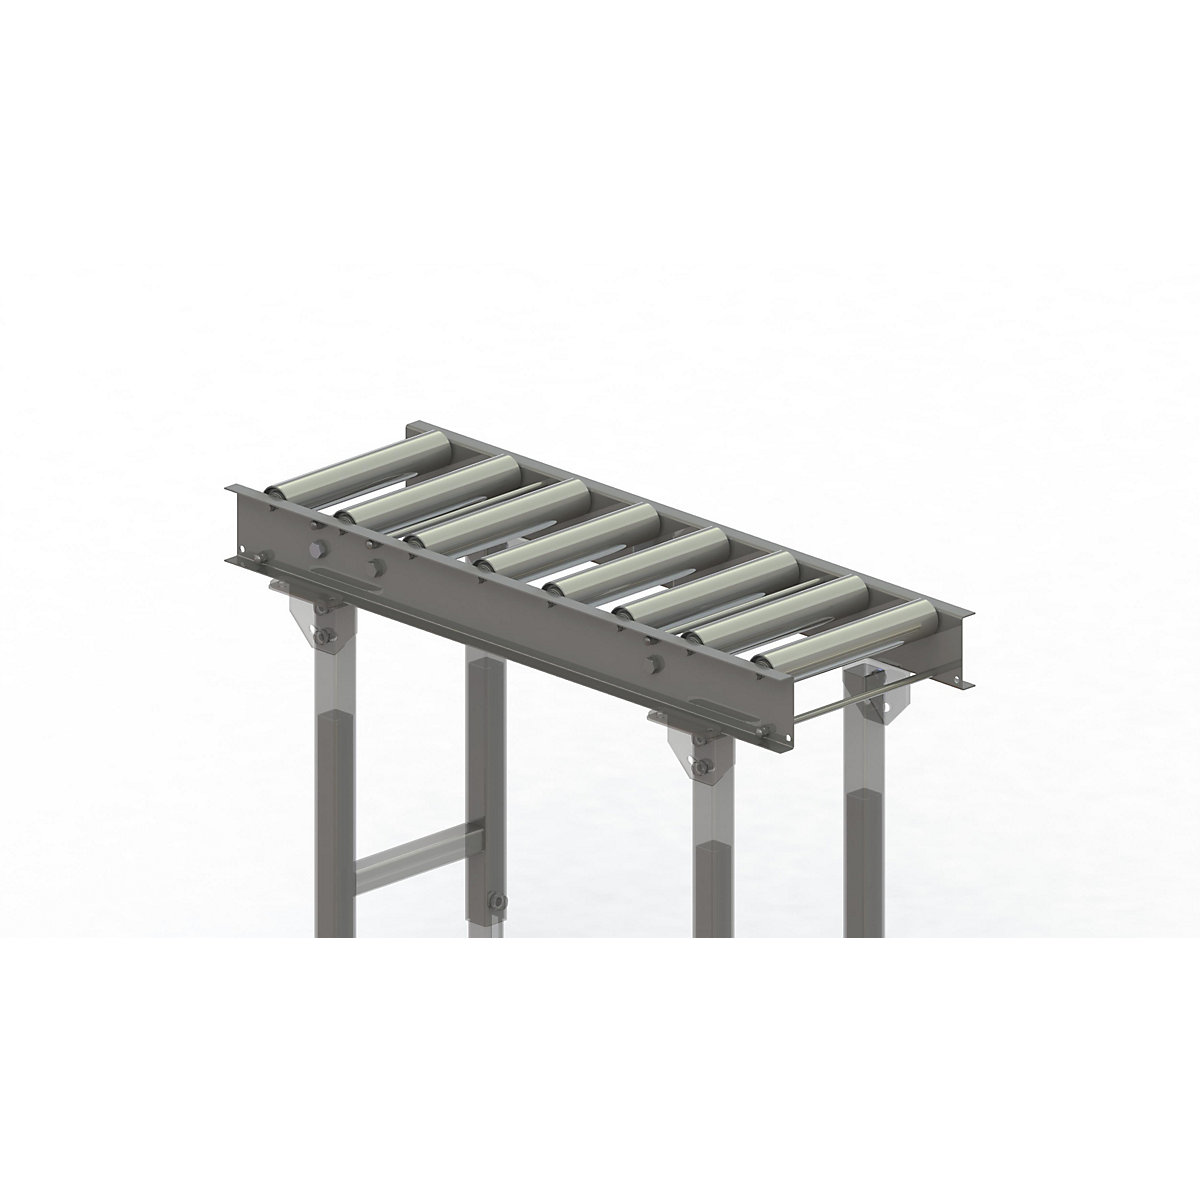 Gura – Roller conveyor, steel frame with zinc plated steel rollers